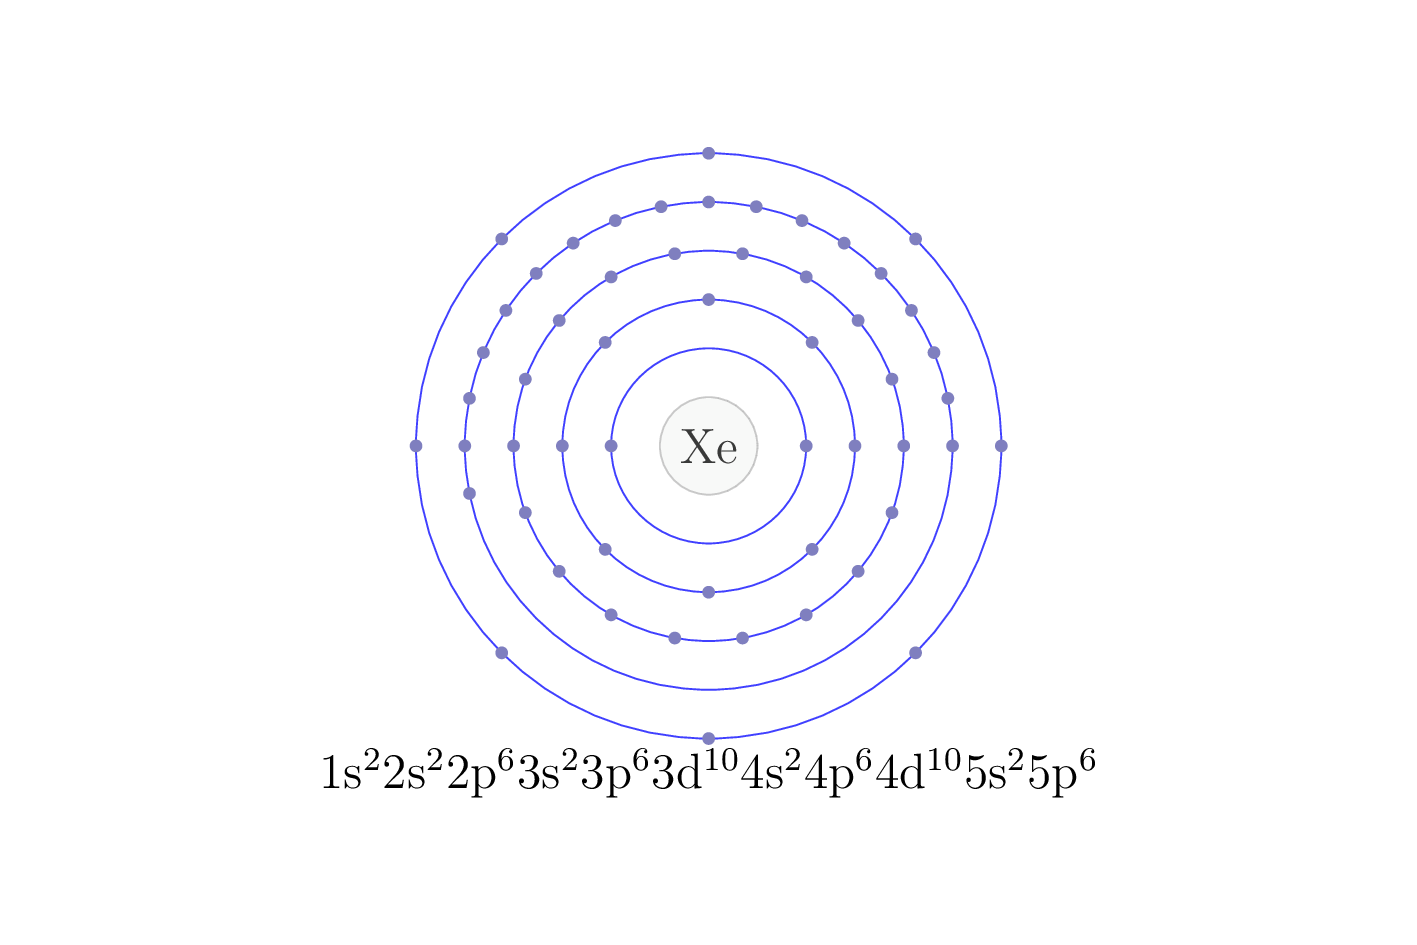 electron configuration of element Xe